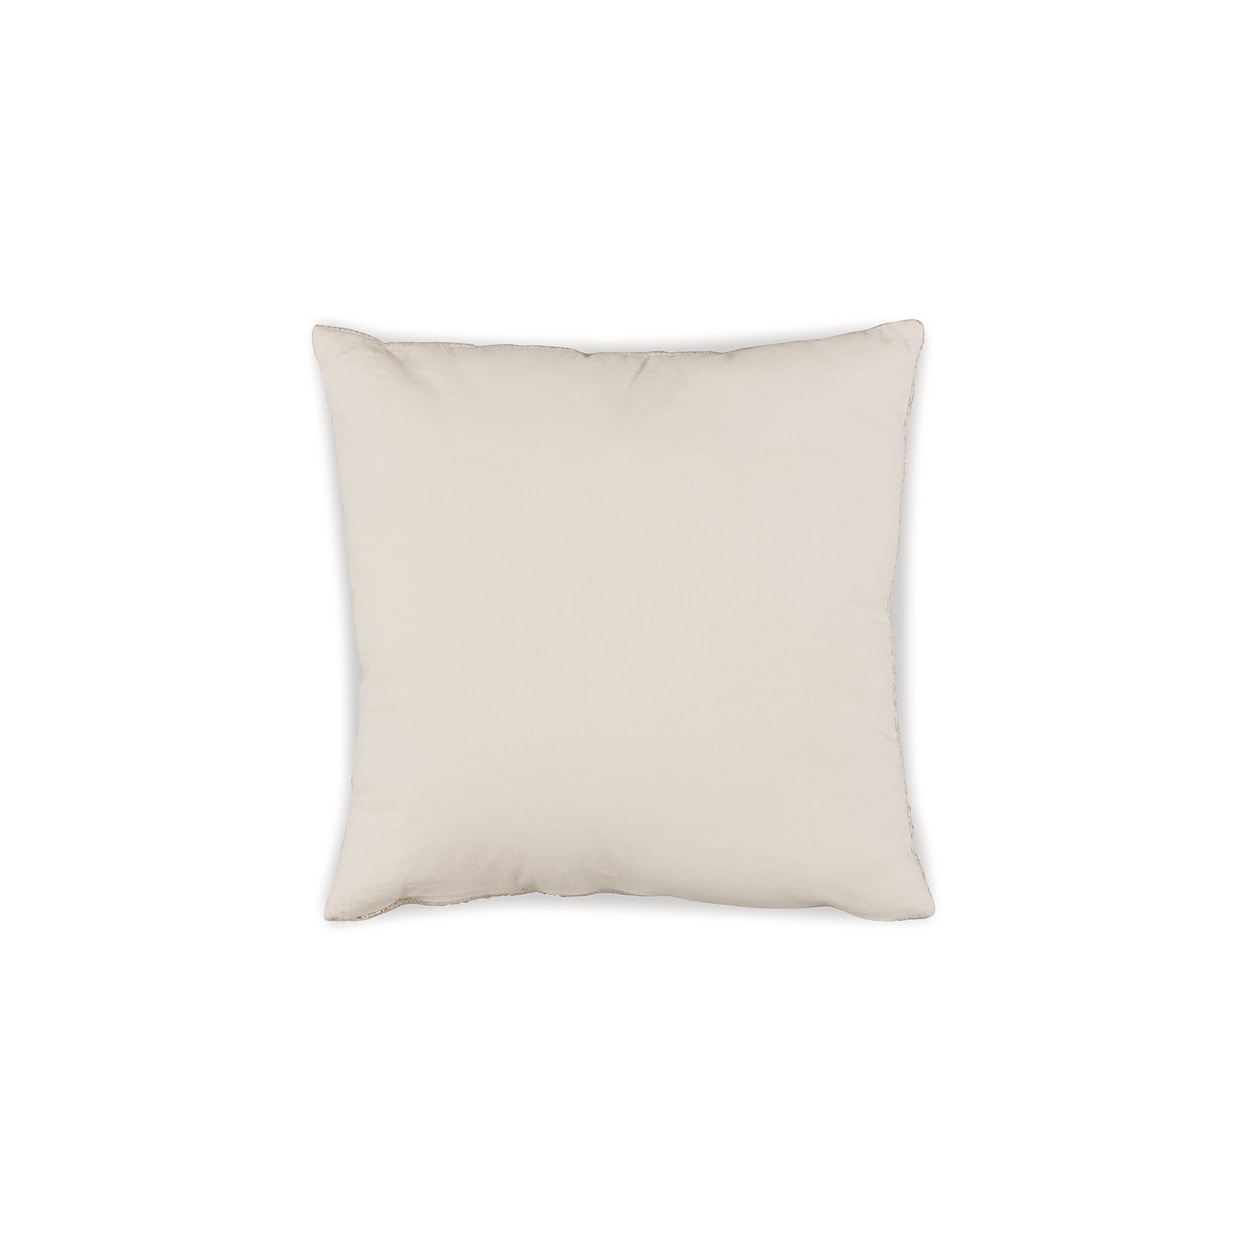 Benchcraft Budrey Pillow (Set of 4)